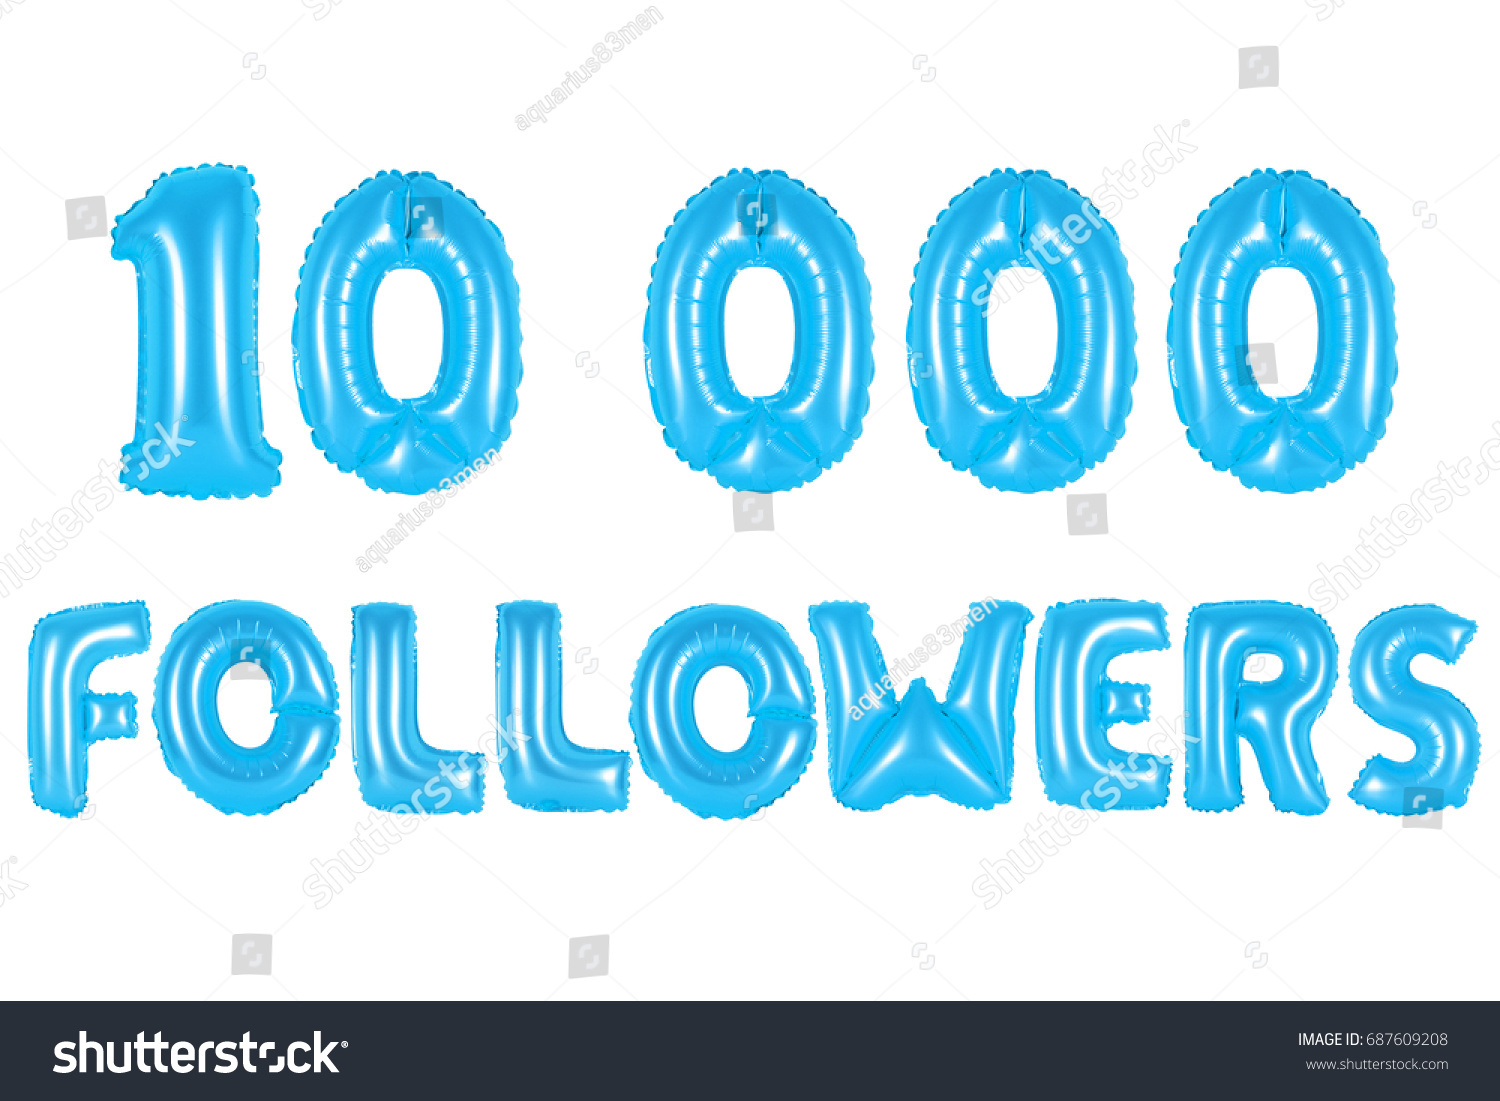 blue alphabet balloons, 10K (ten thousand) followers, blue number and letter balloon #687609208